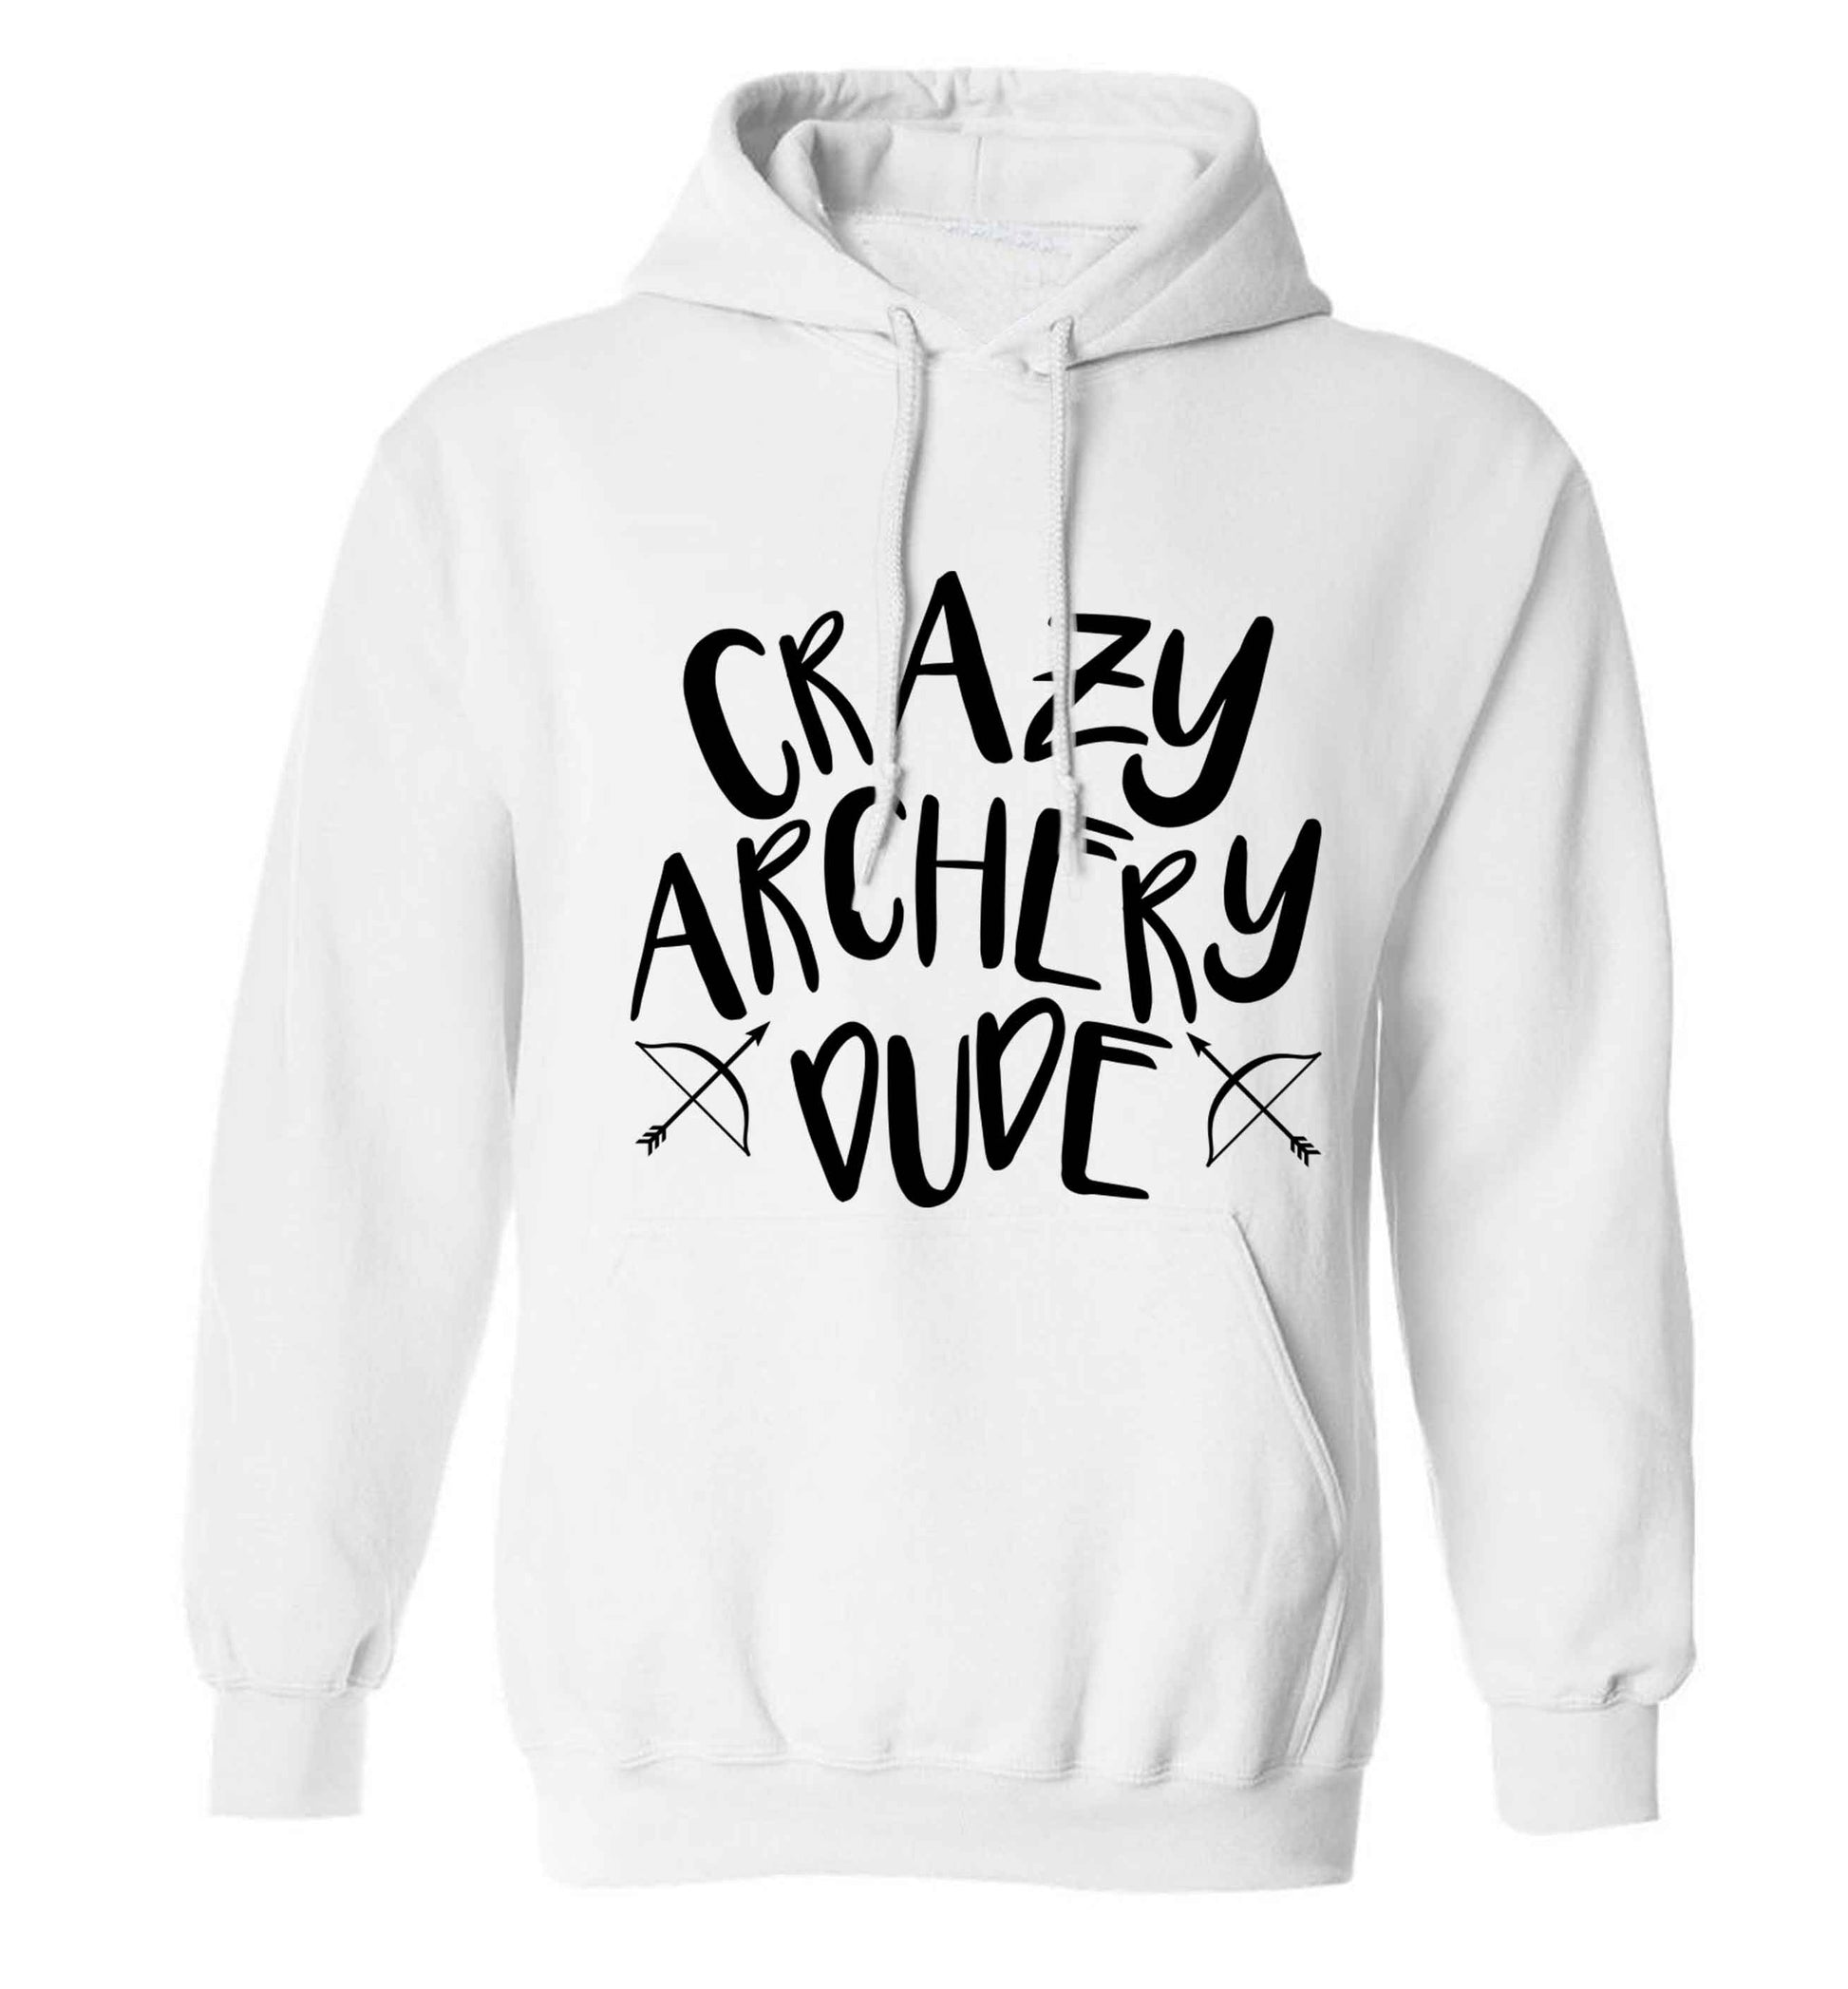 Crazy archery dude adults unisex white hoodie 2XL